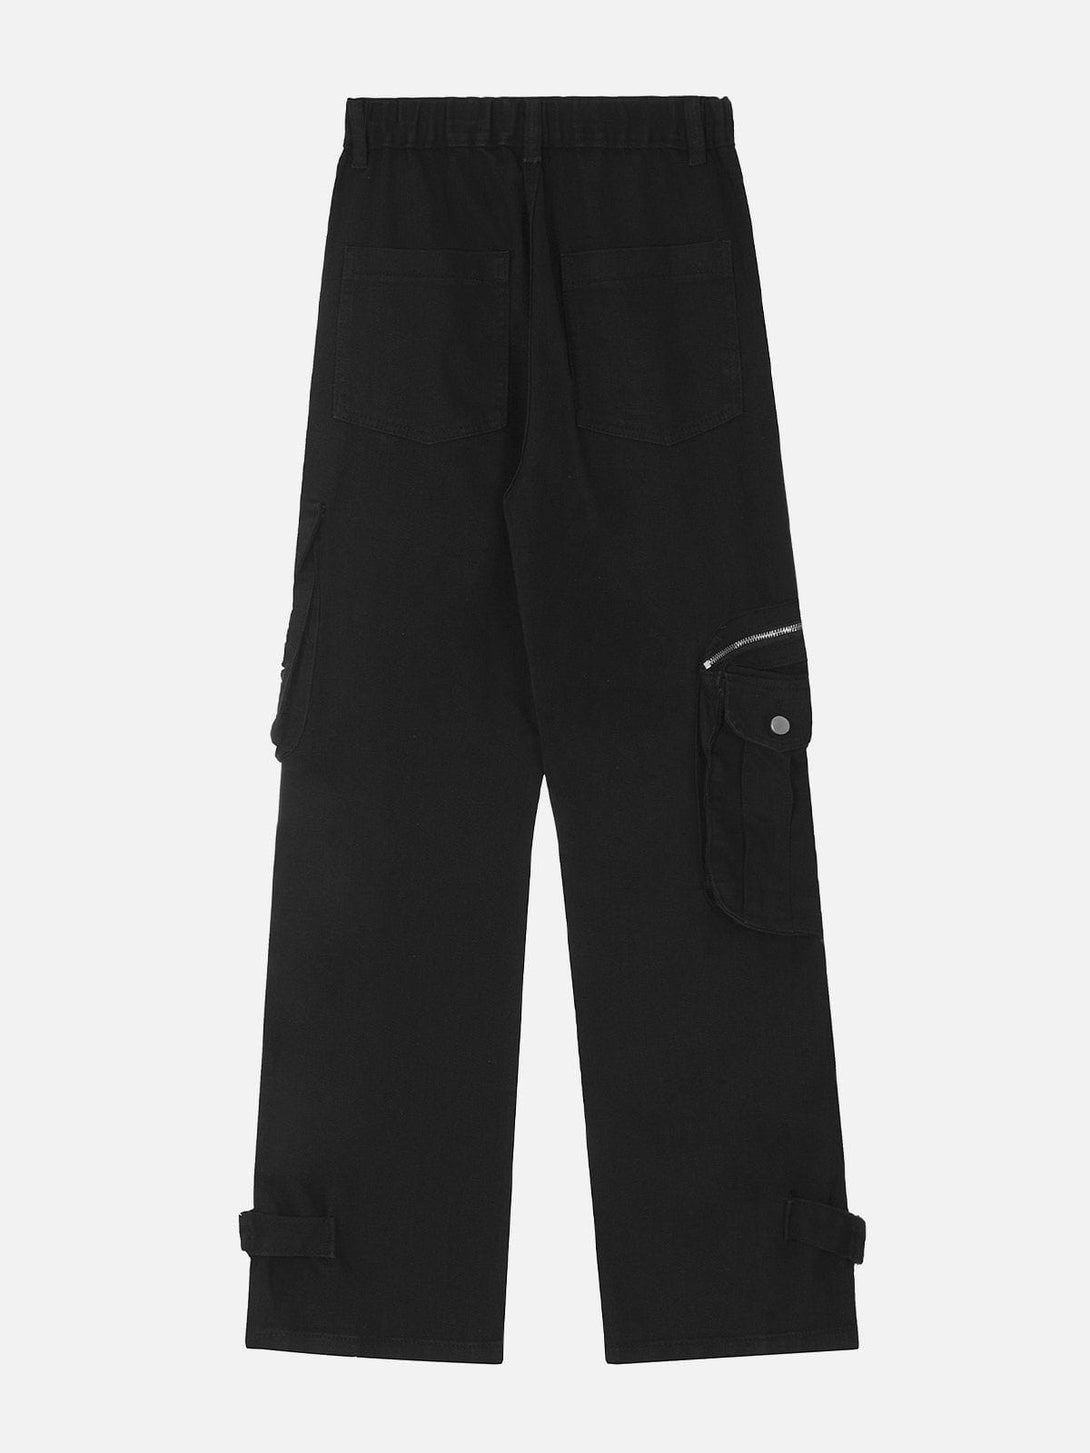 Levefly - Multi-pocket Cargo Pants - Streetwear Fashion - levefly.com